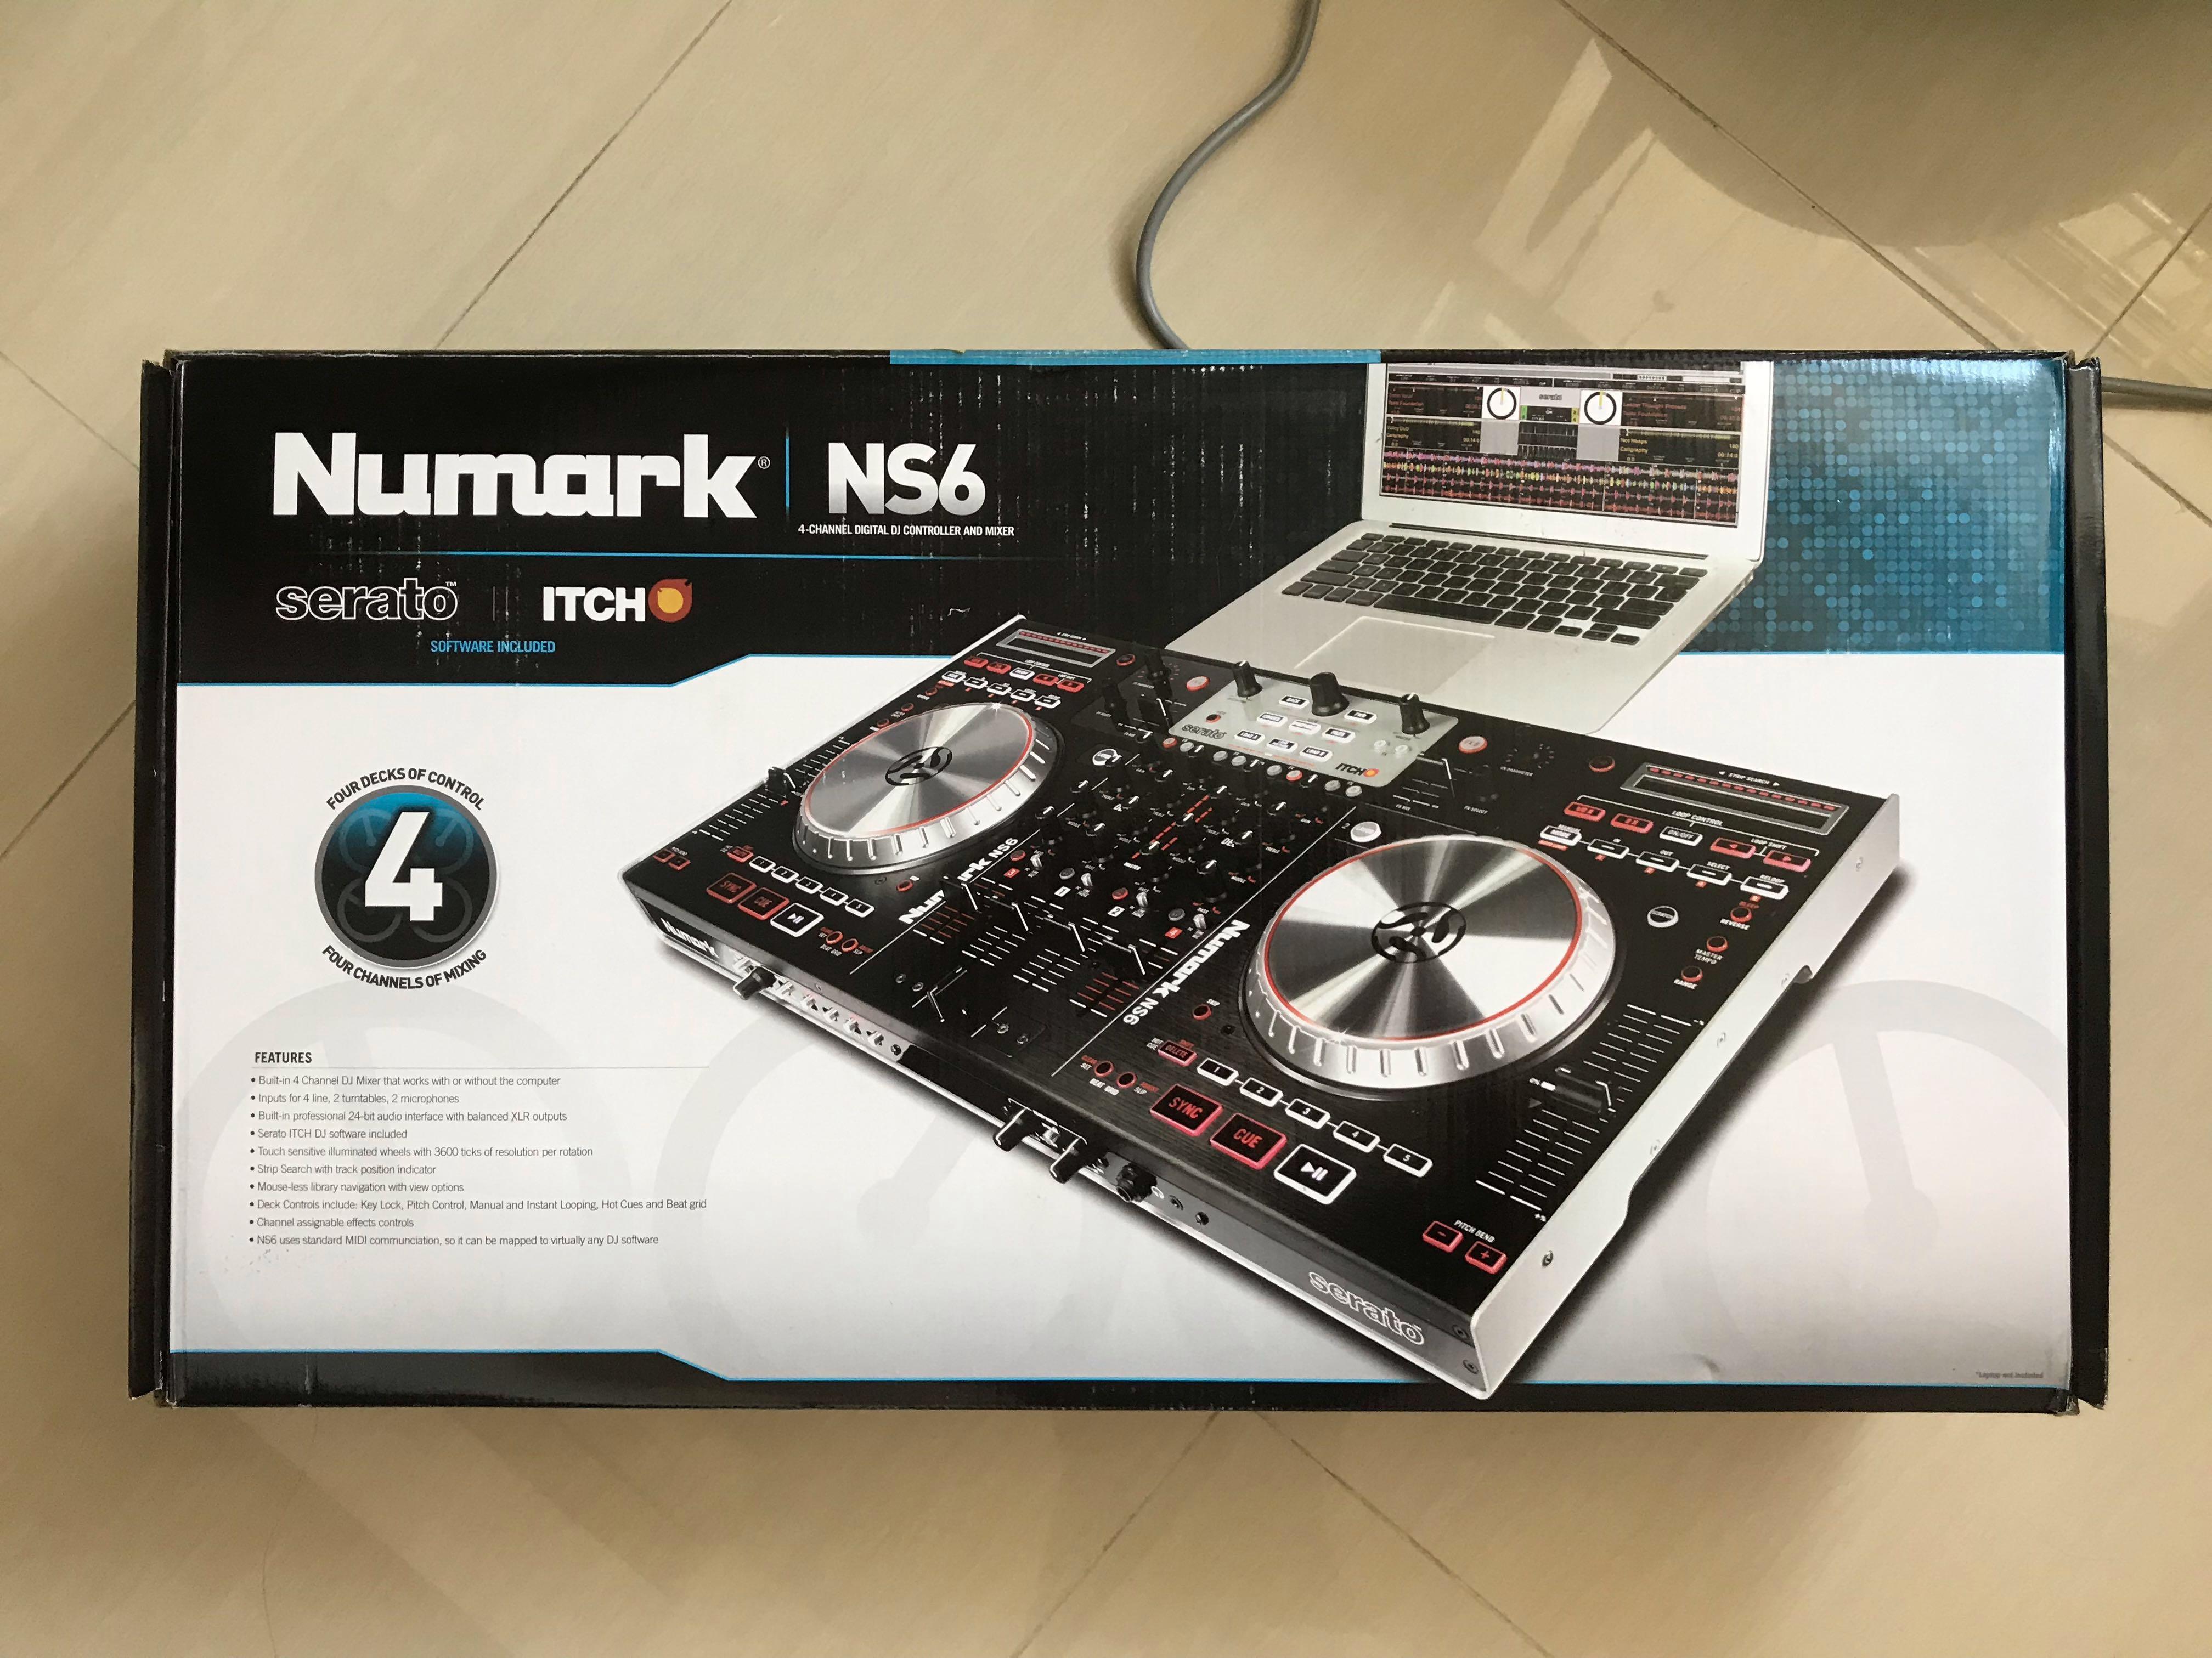 Numark NS6 4-channel DJ controller and mixer 打碟機及混音器, 興趣